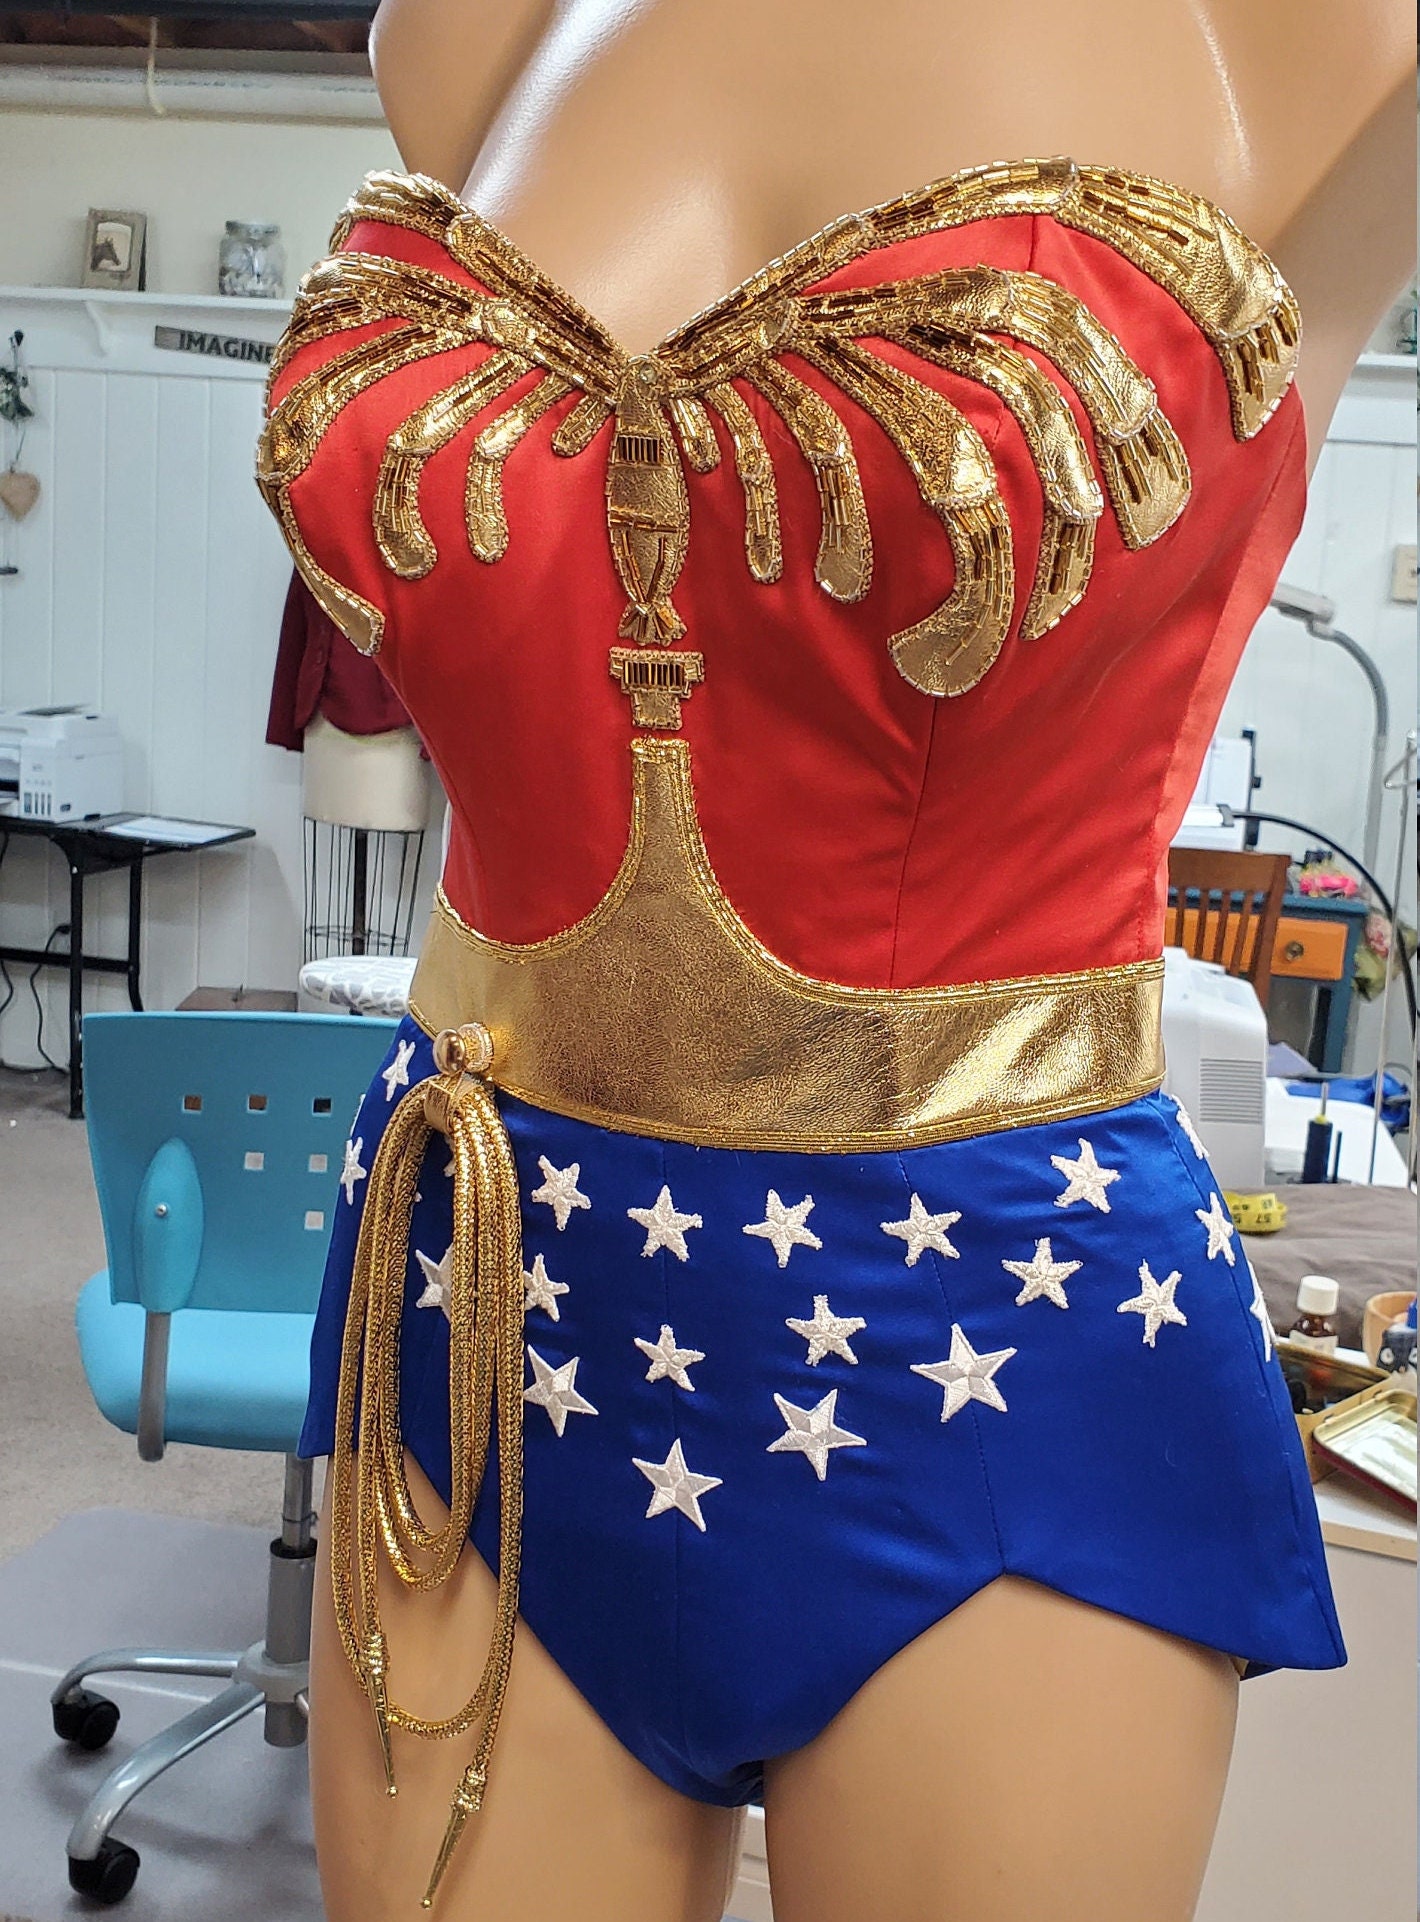 Classic Lynda Carter Season 2 Full Wonder Woman Costume: Corset, Tiara,  Cuffs, Belt, Lasso, Choice Briefs or Shorts or Skirt WITH Cape 